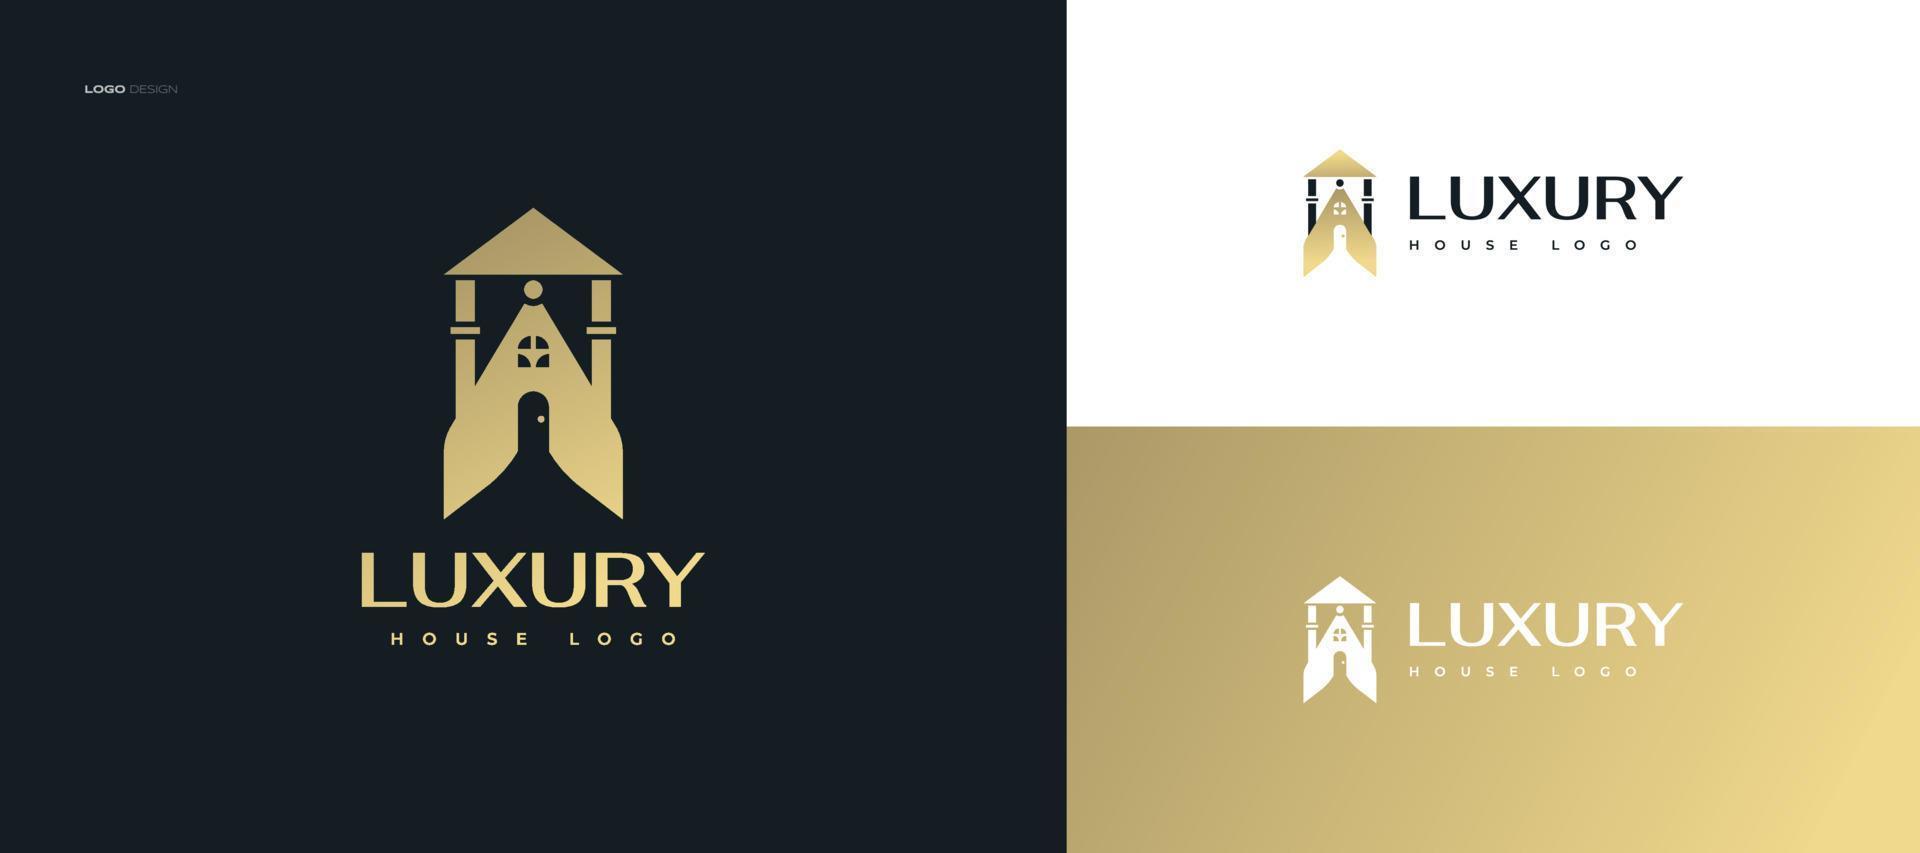 Luxury Golden House or Mansion Logo Design, Suitable for Real Estate, Villa, Hotel or Resort Industry Logo vector